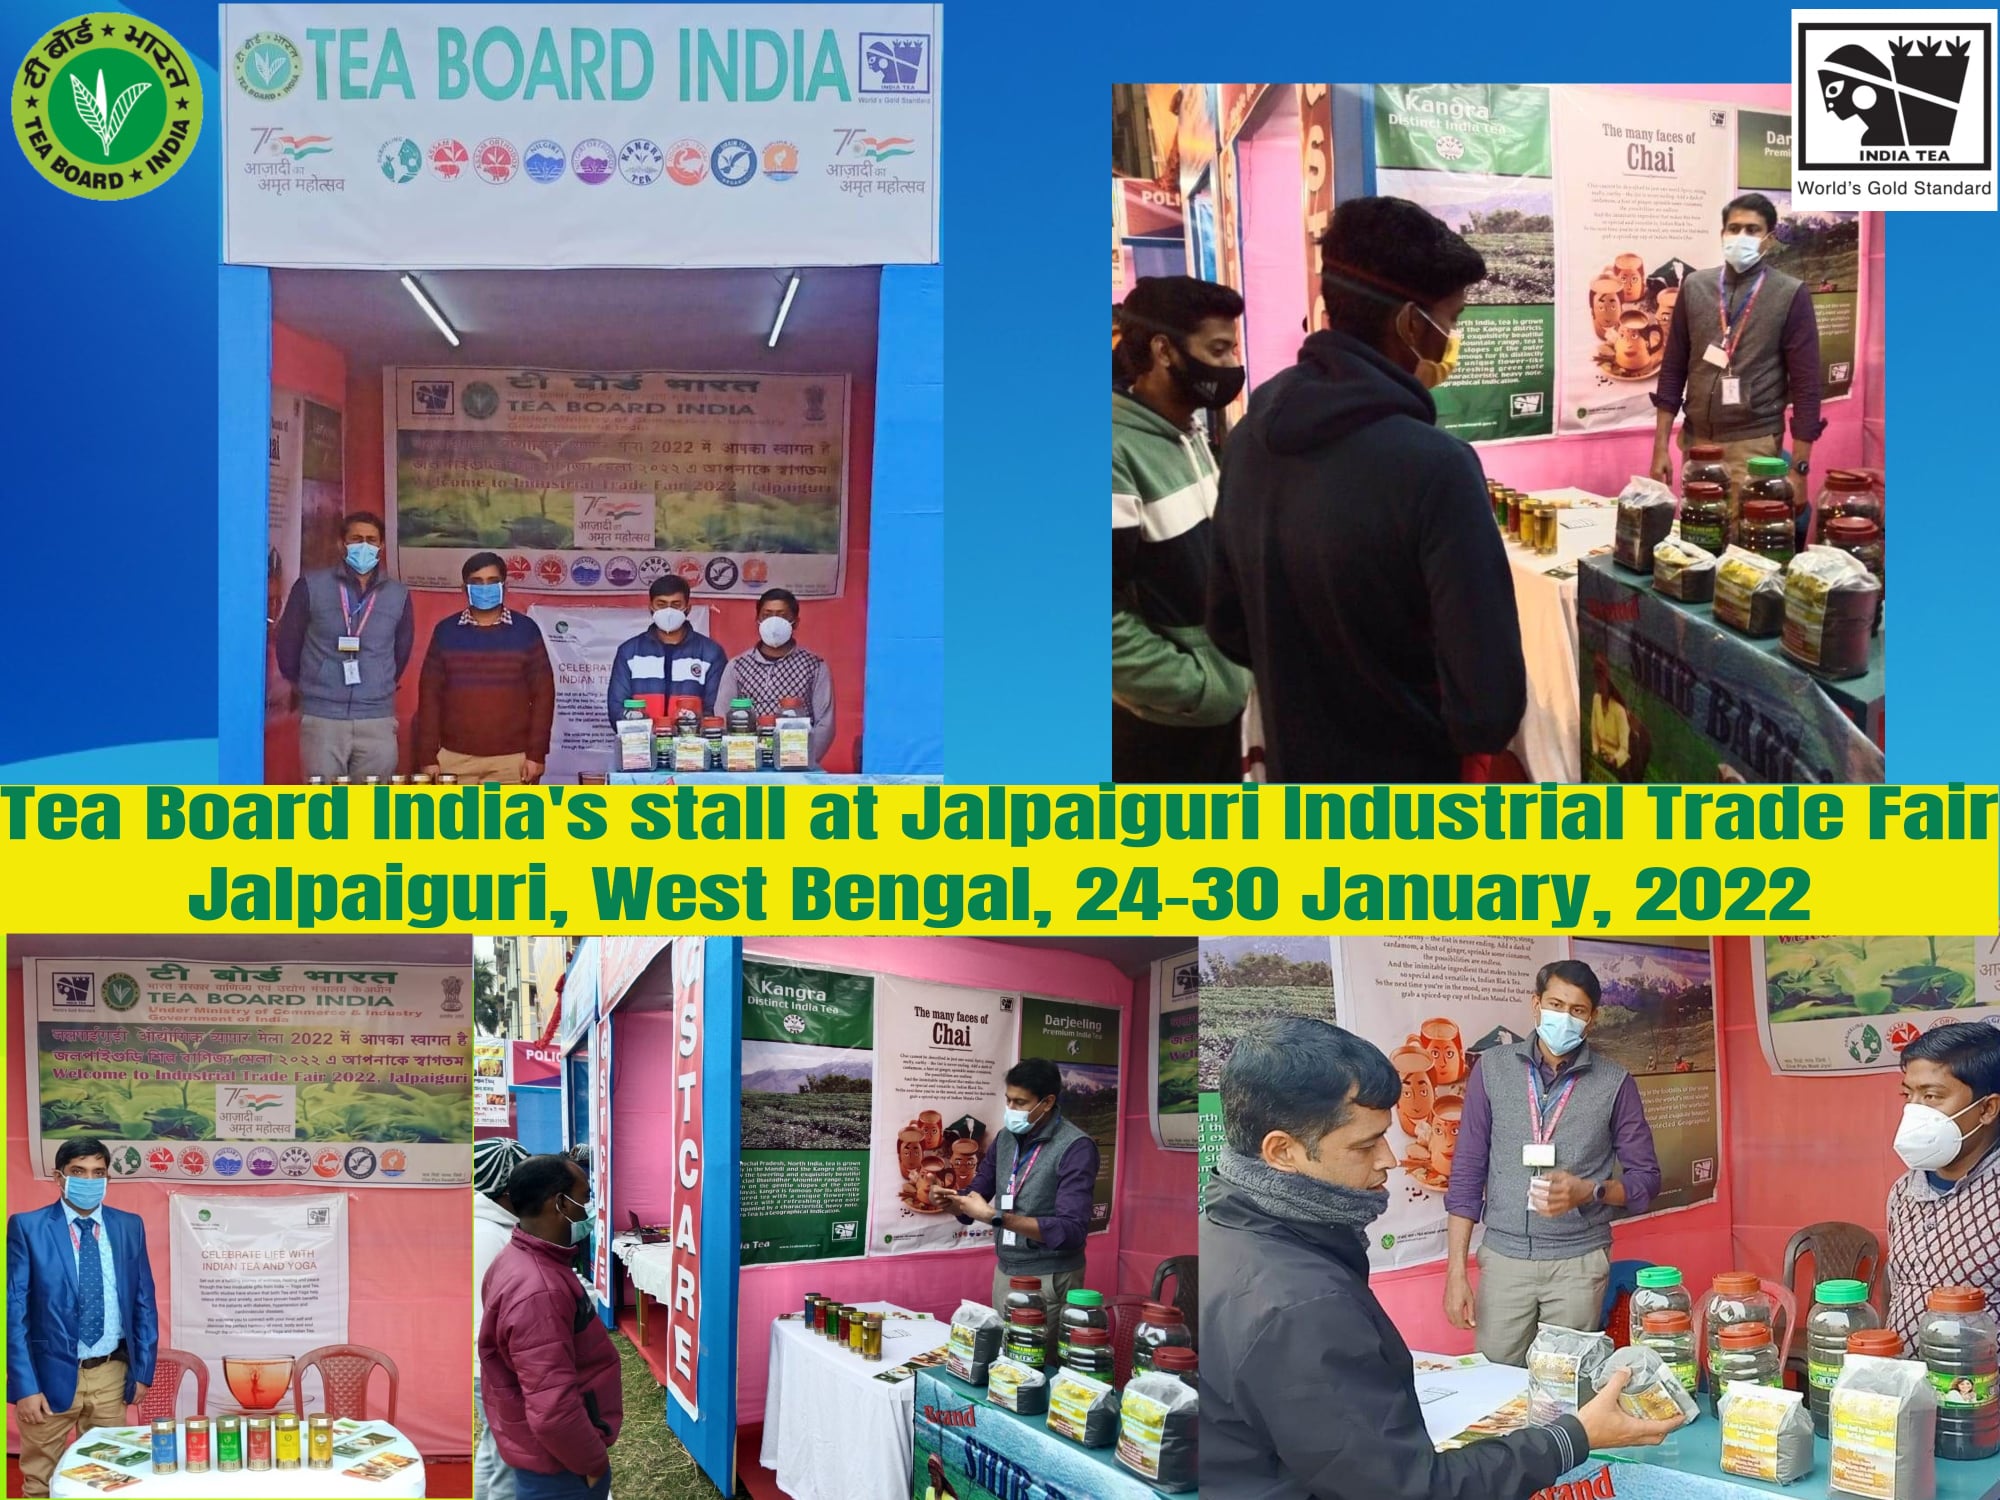 Tea Board India's participation at Jalpaiguri Industrial Trade Fair, 24-30 January 2022